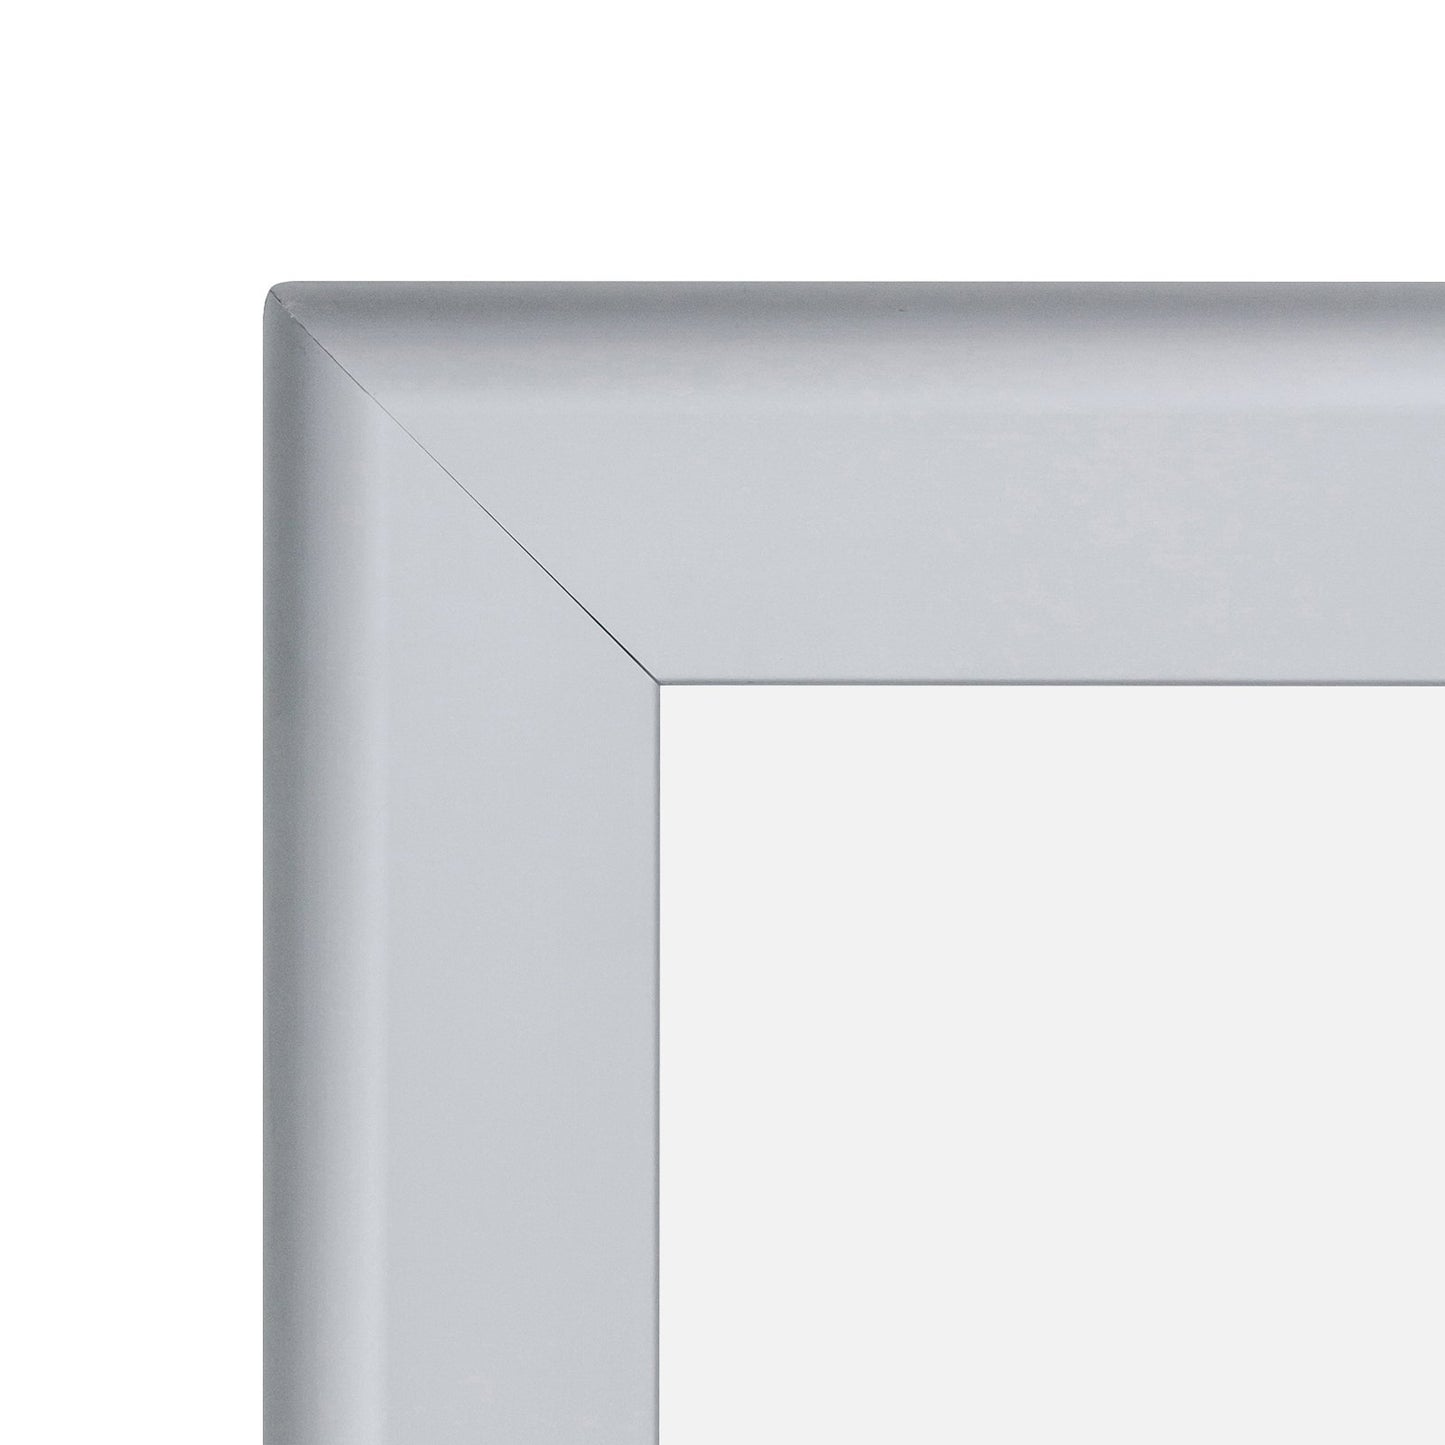 30x40 Silver SnapeZo® Snap Frame - 1.7" Profile